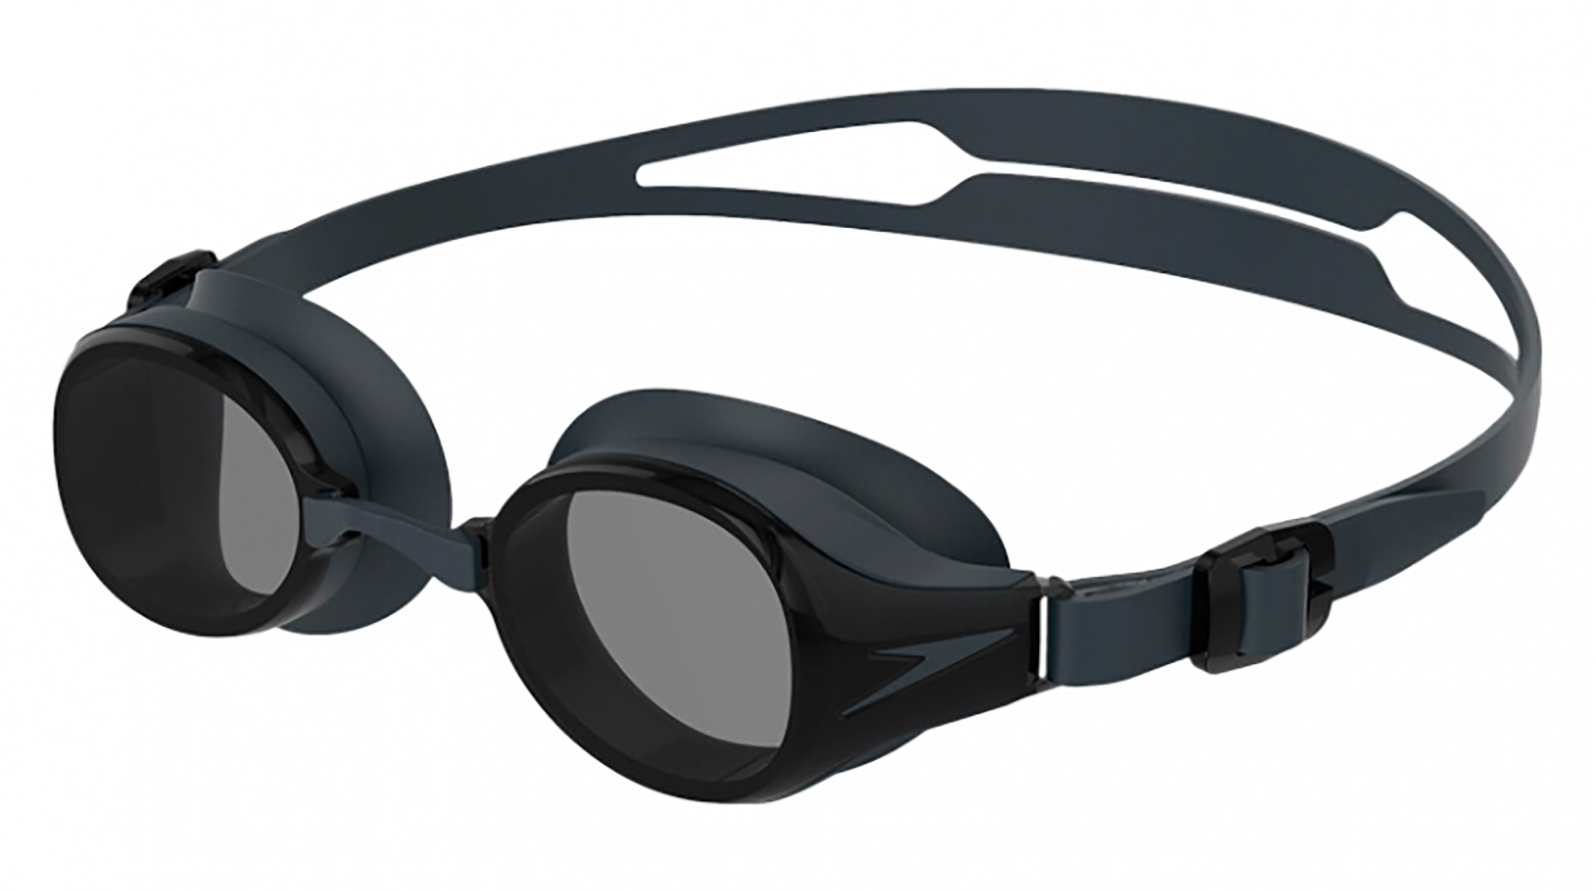 Speedo Очки для плавания Hydropure Optical F808 -3,0 speedo очки для плавания hydropure optical f809 4 5